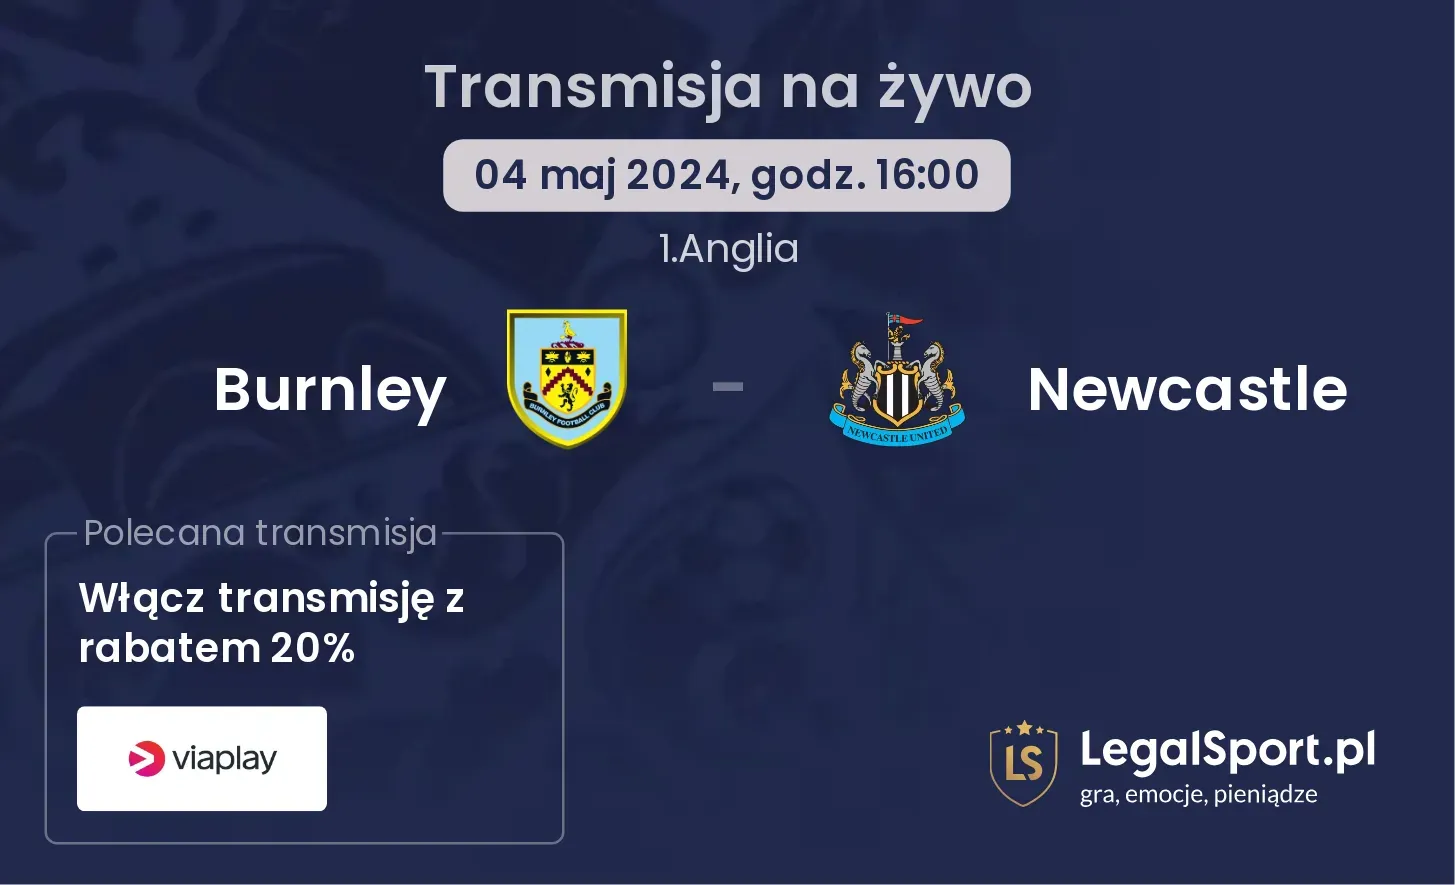 Burnley - Newcastle transmisja na żywo